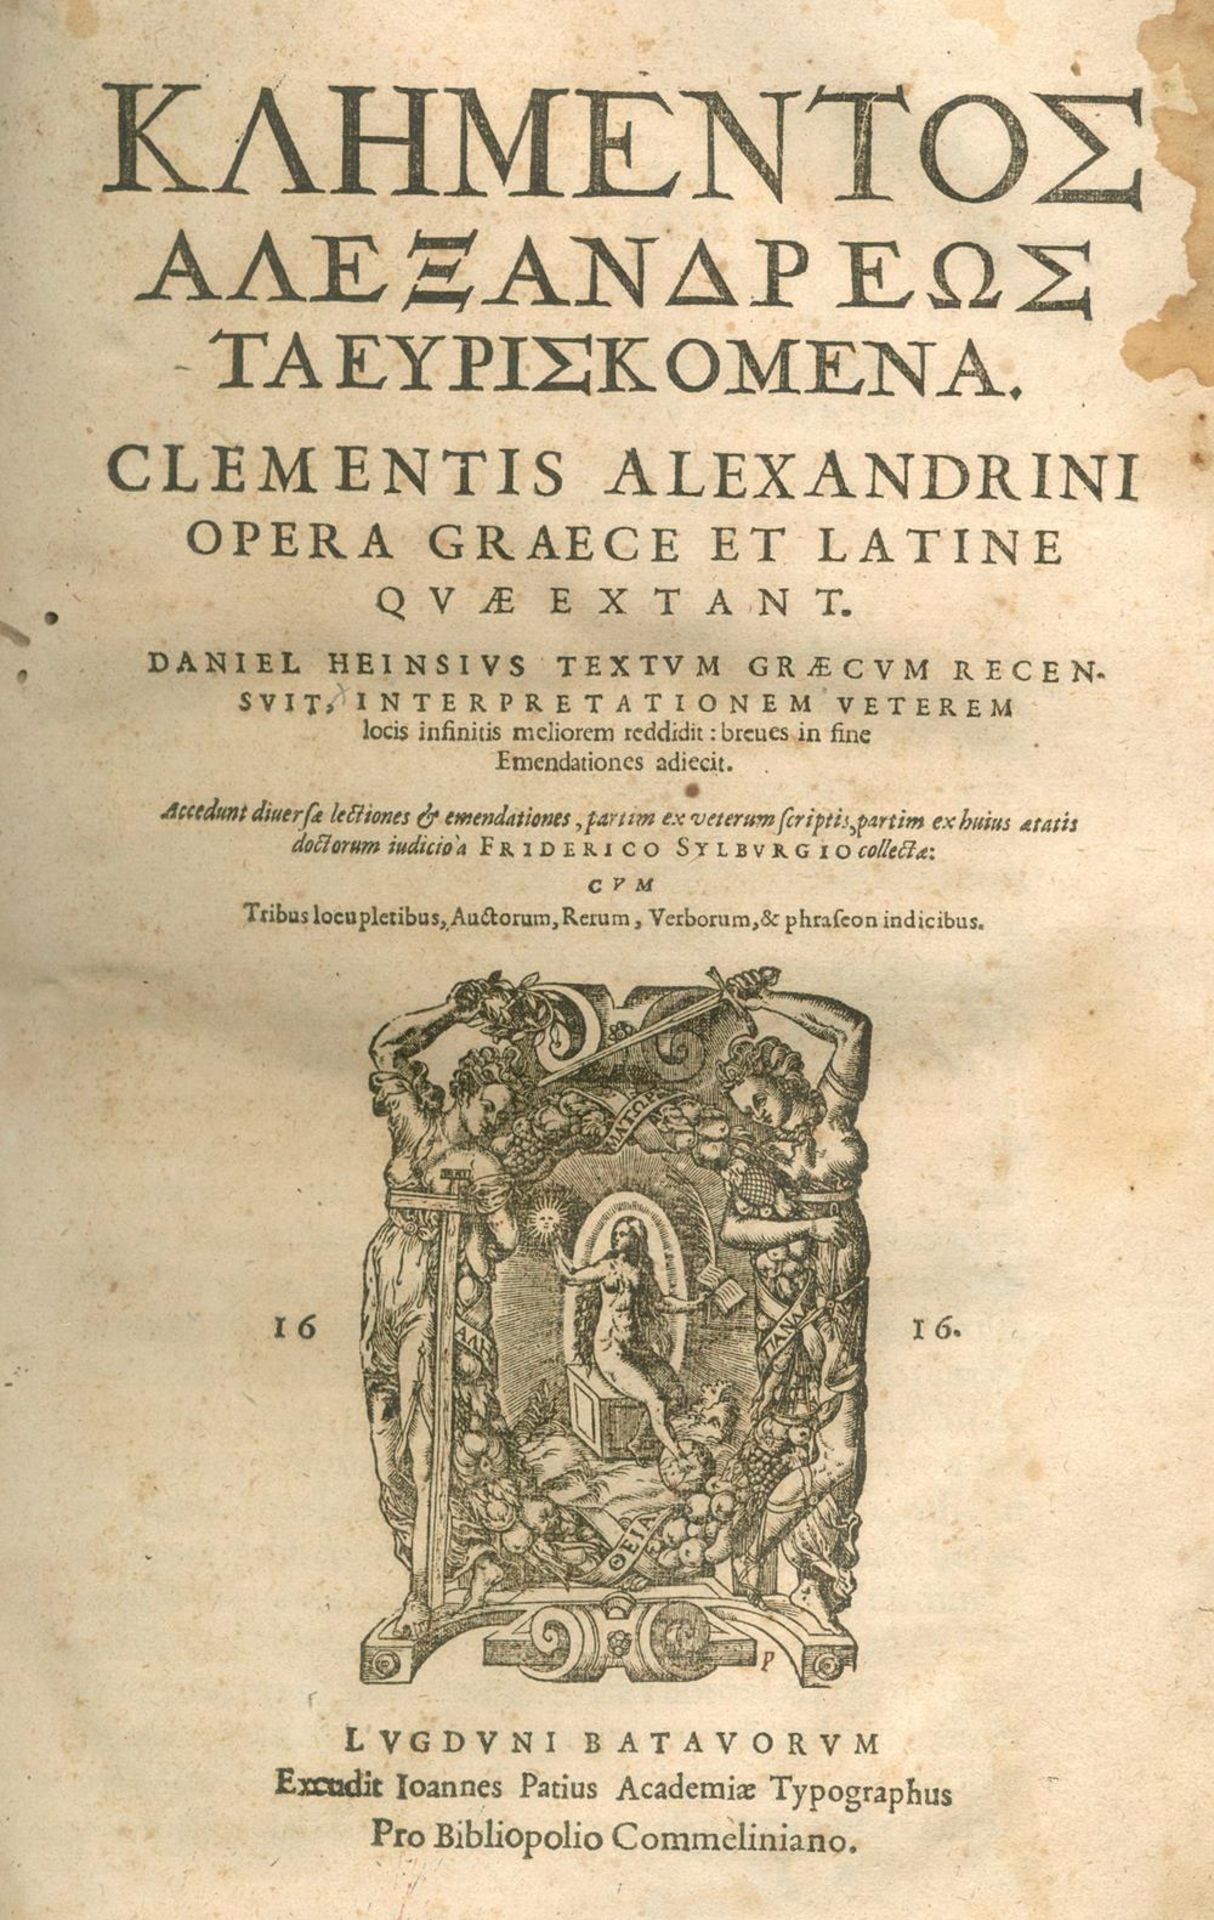 Clemens Alexandrinus.